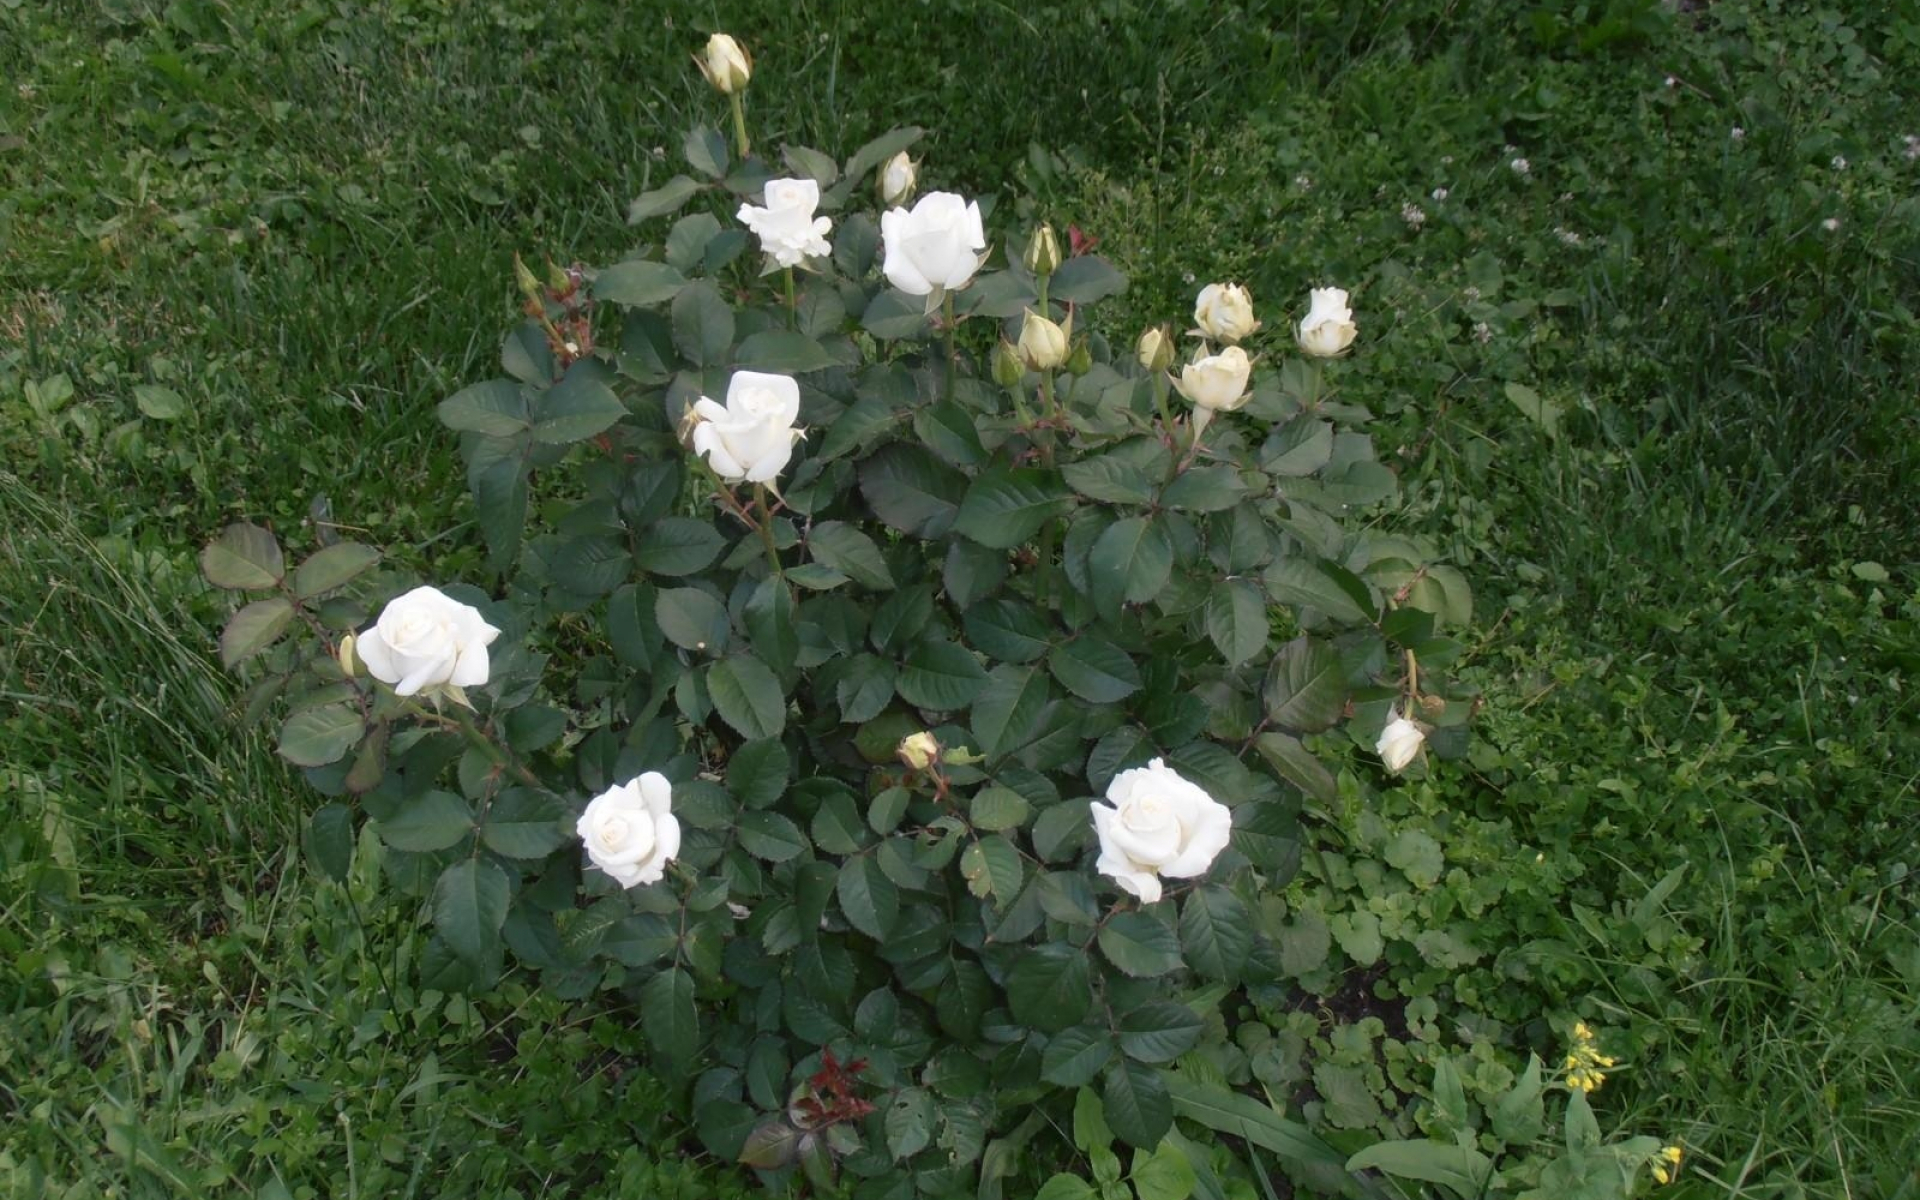 Роза капабилити фото и описание